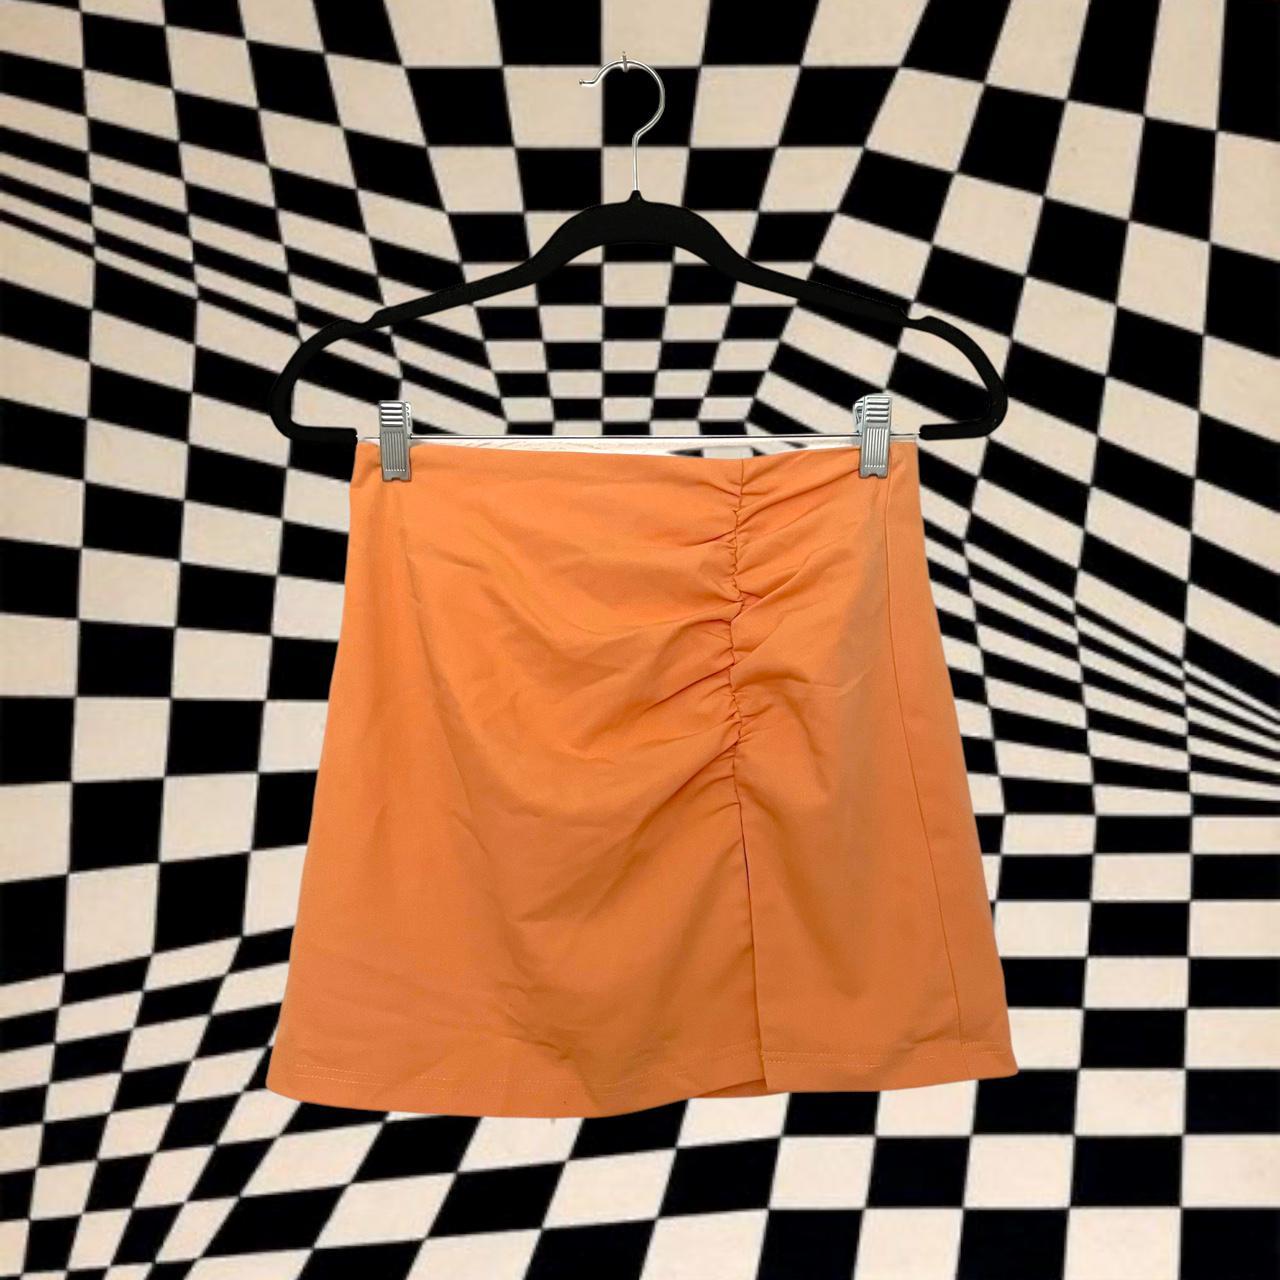 Product Image 1 - Orange mini skirt!

originally purchased from